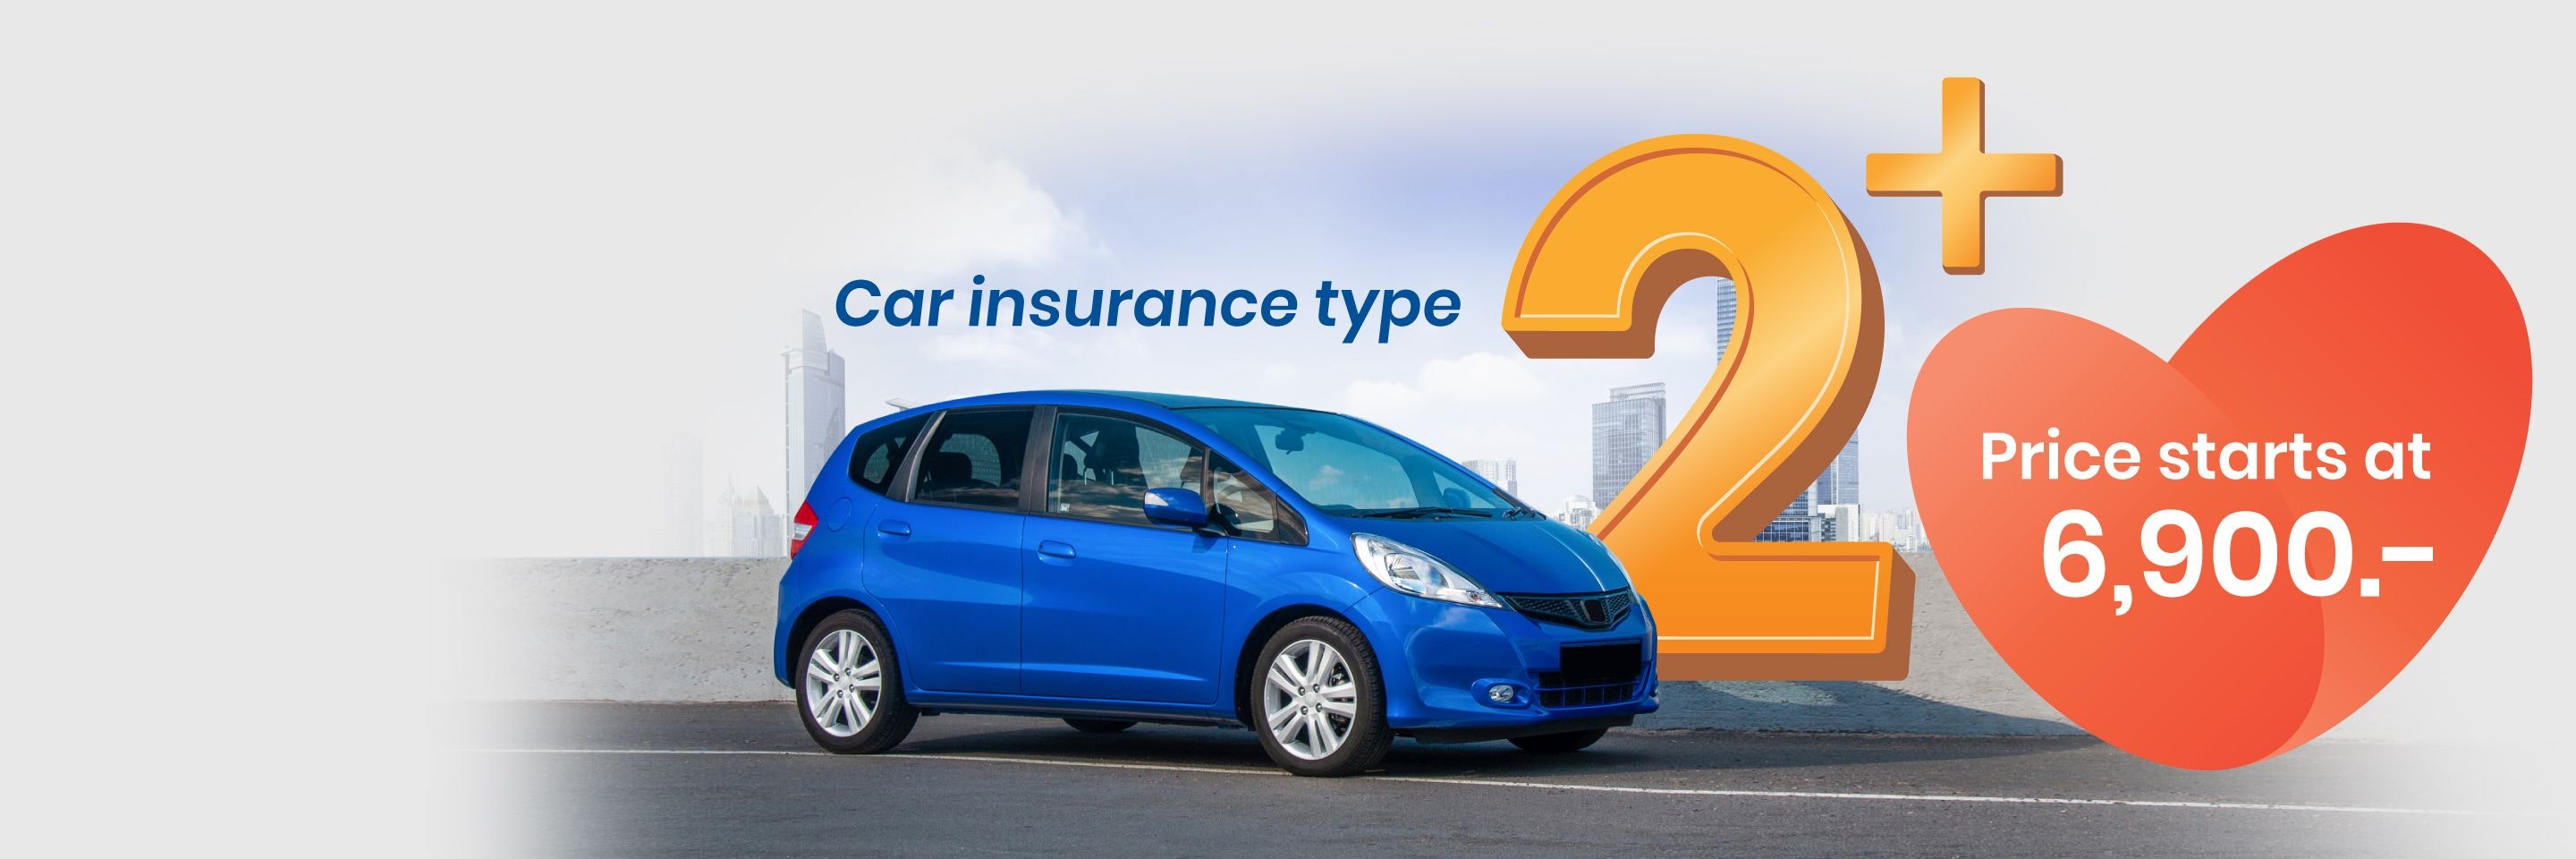 Car Insurance type 2+